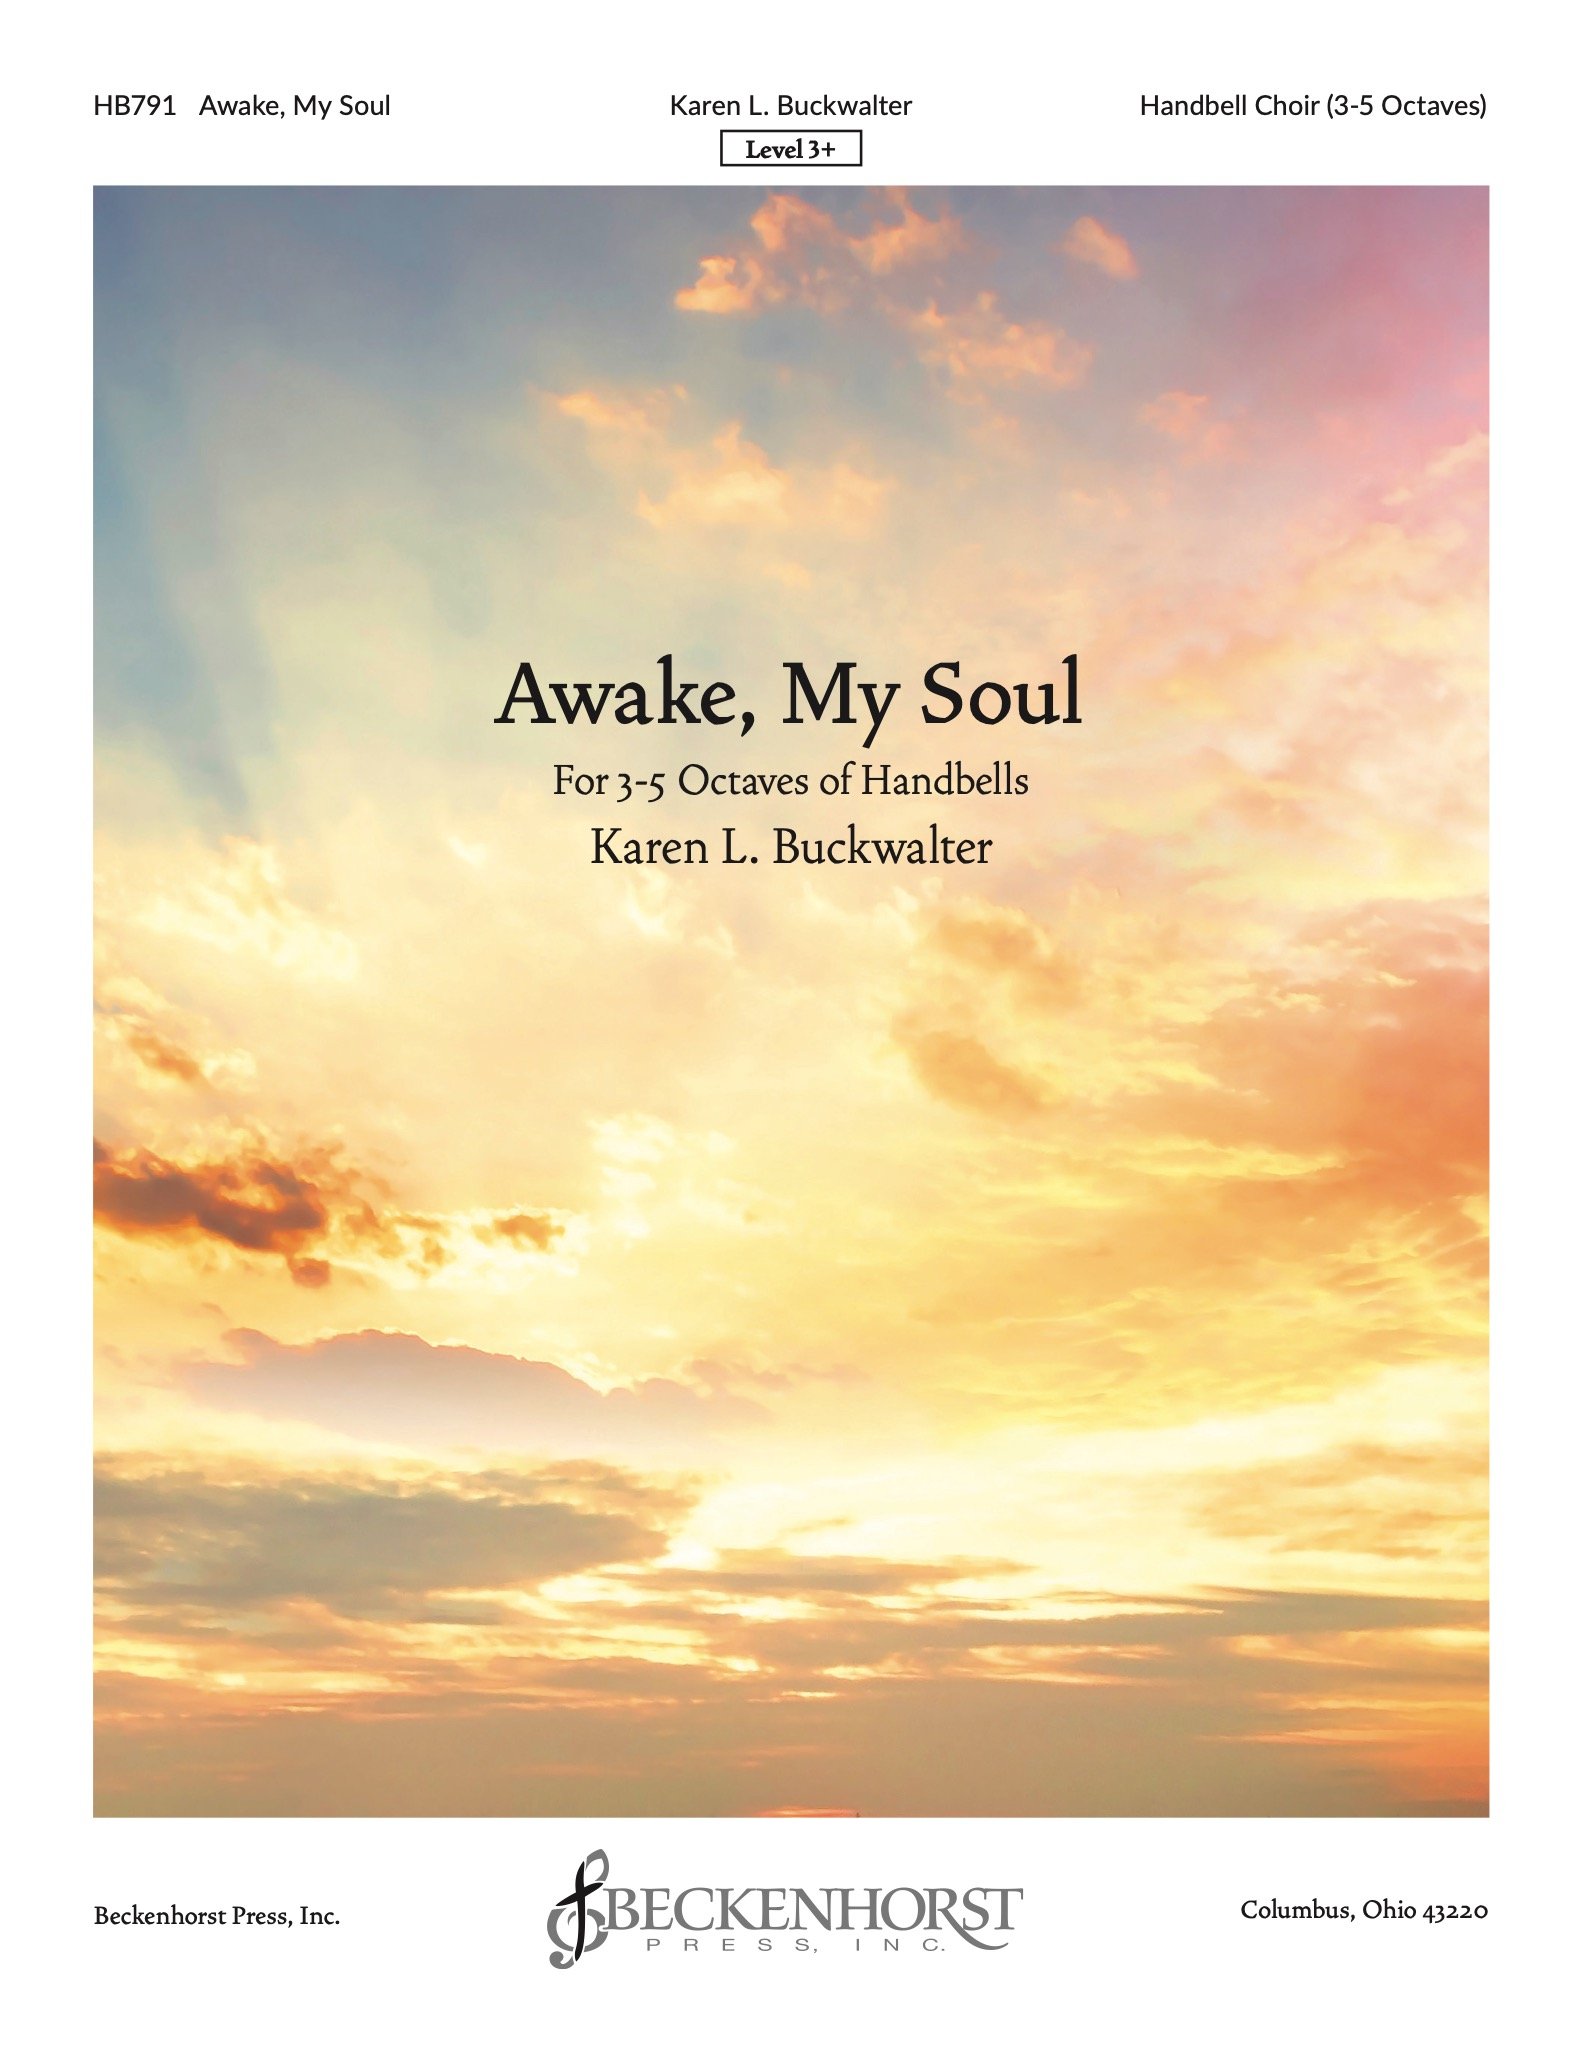 Awake, My Soul handbell sheet music cover